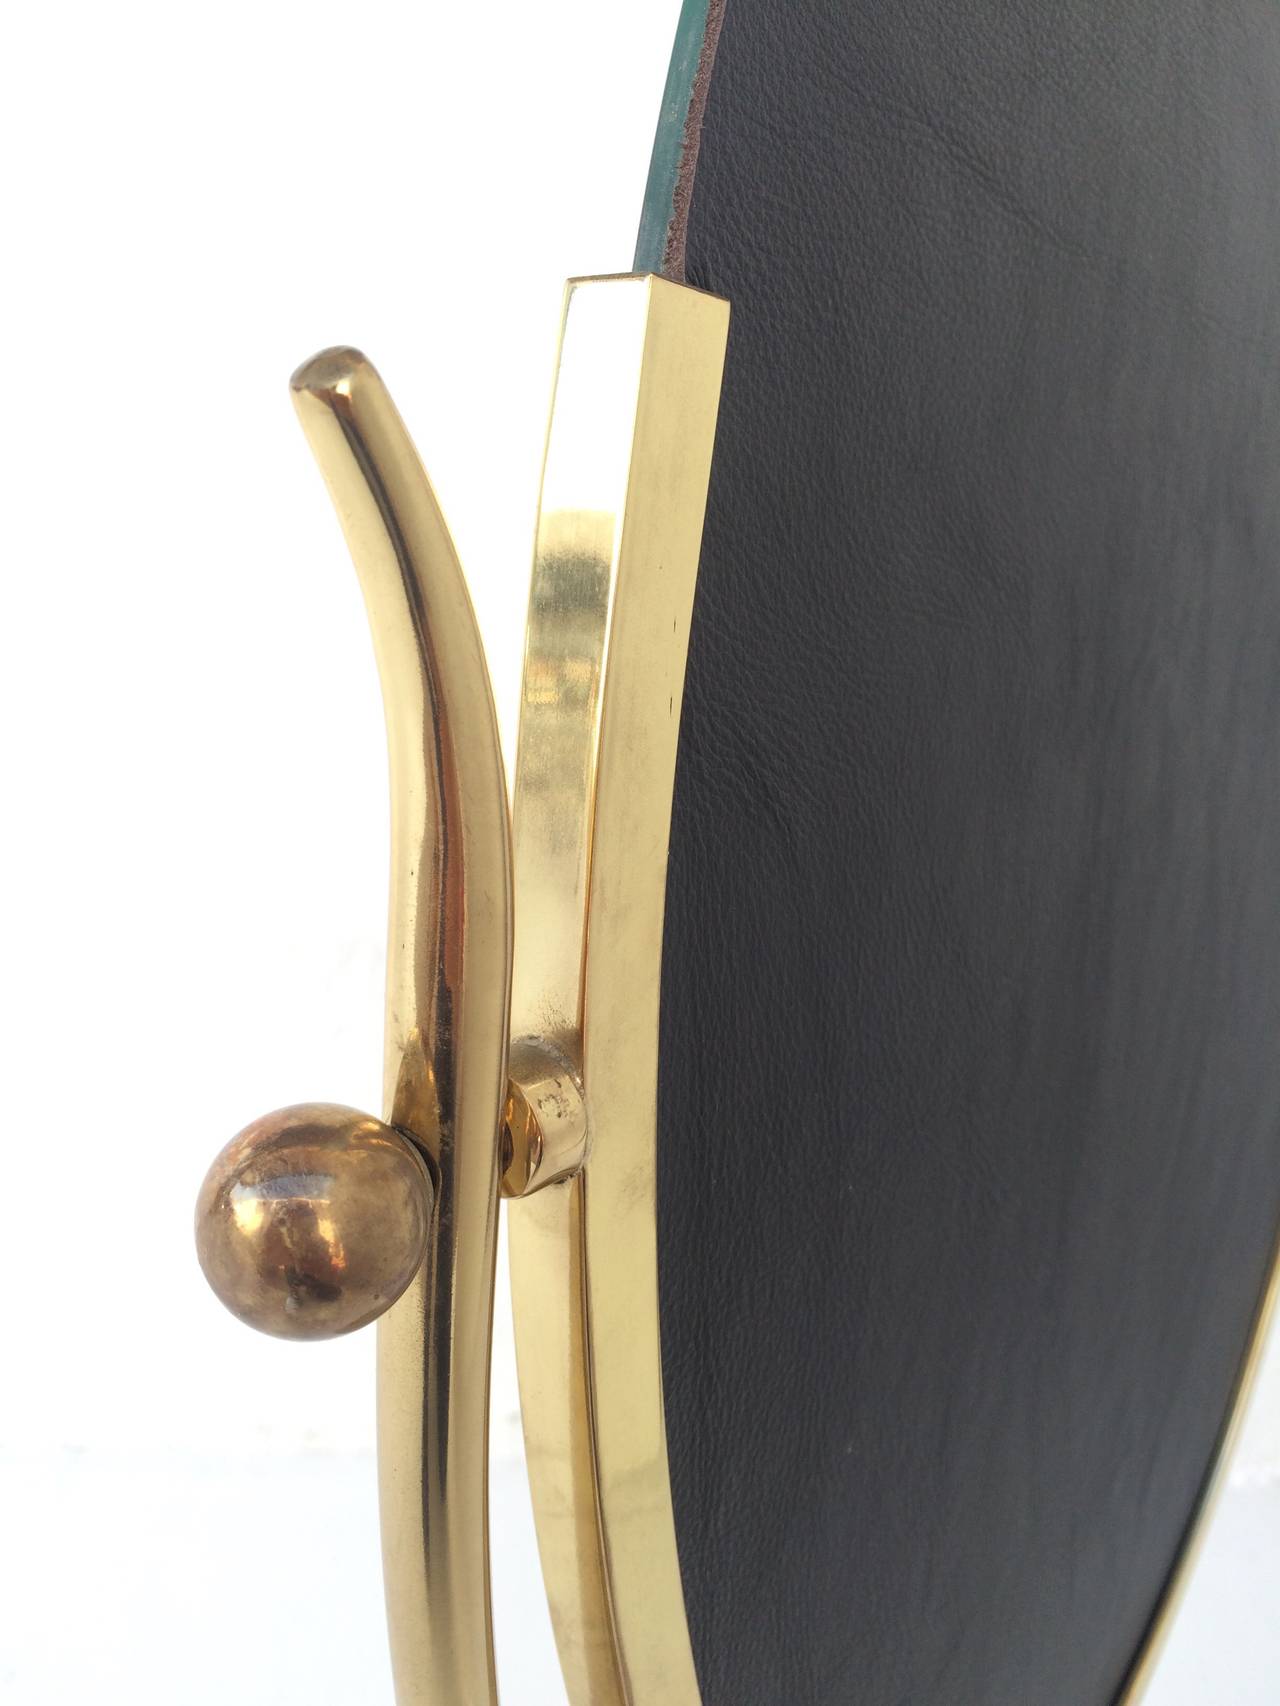 Beveled Brass Table Mirror Designed by Charles Hollis Jones